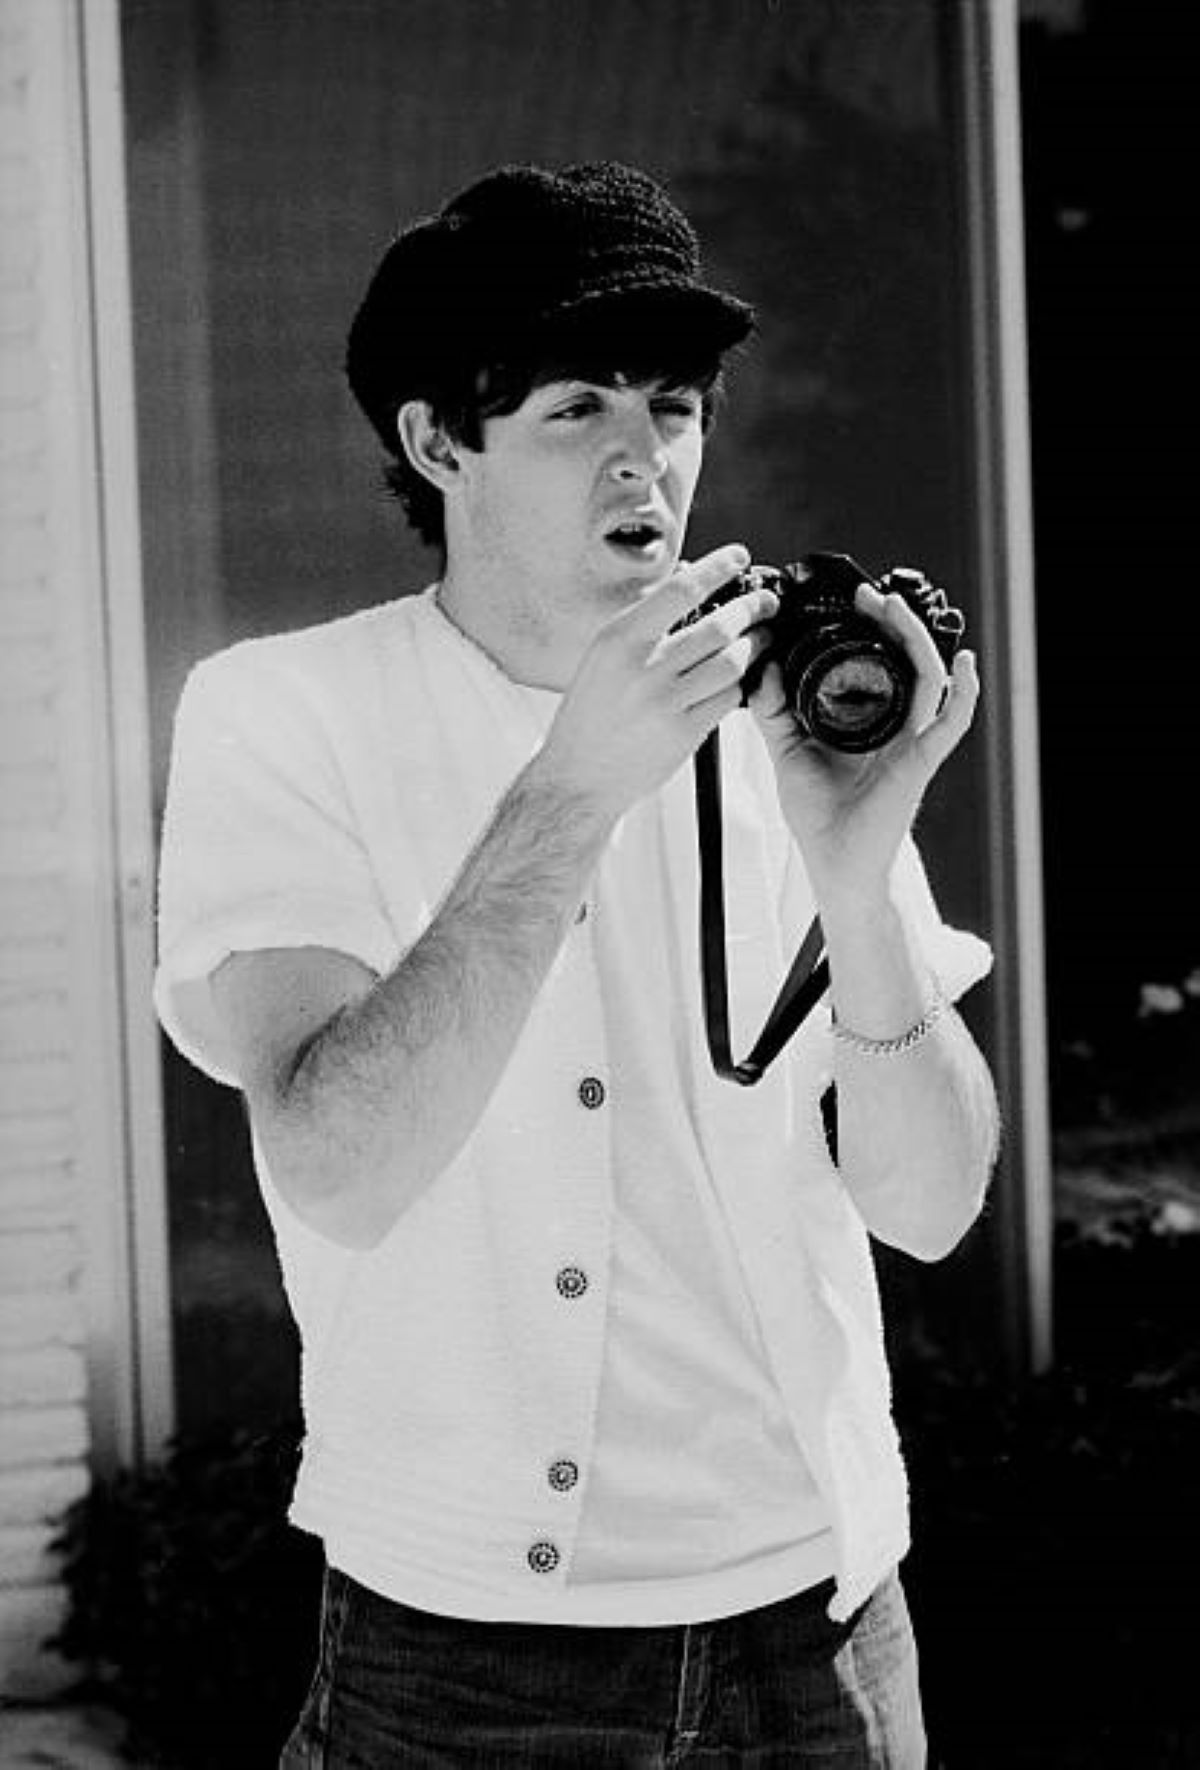 Paul McCartney of the Beatles holds a camera as he prepares to photograph, Miami Beach, Florida, February 1964